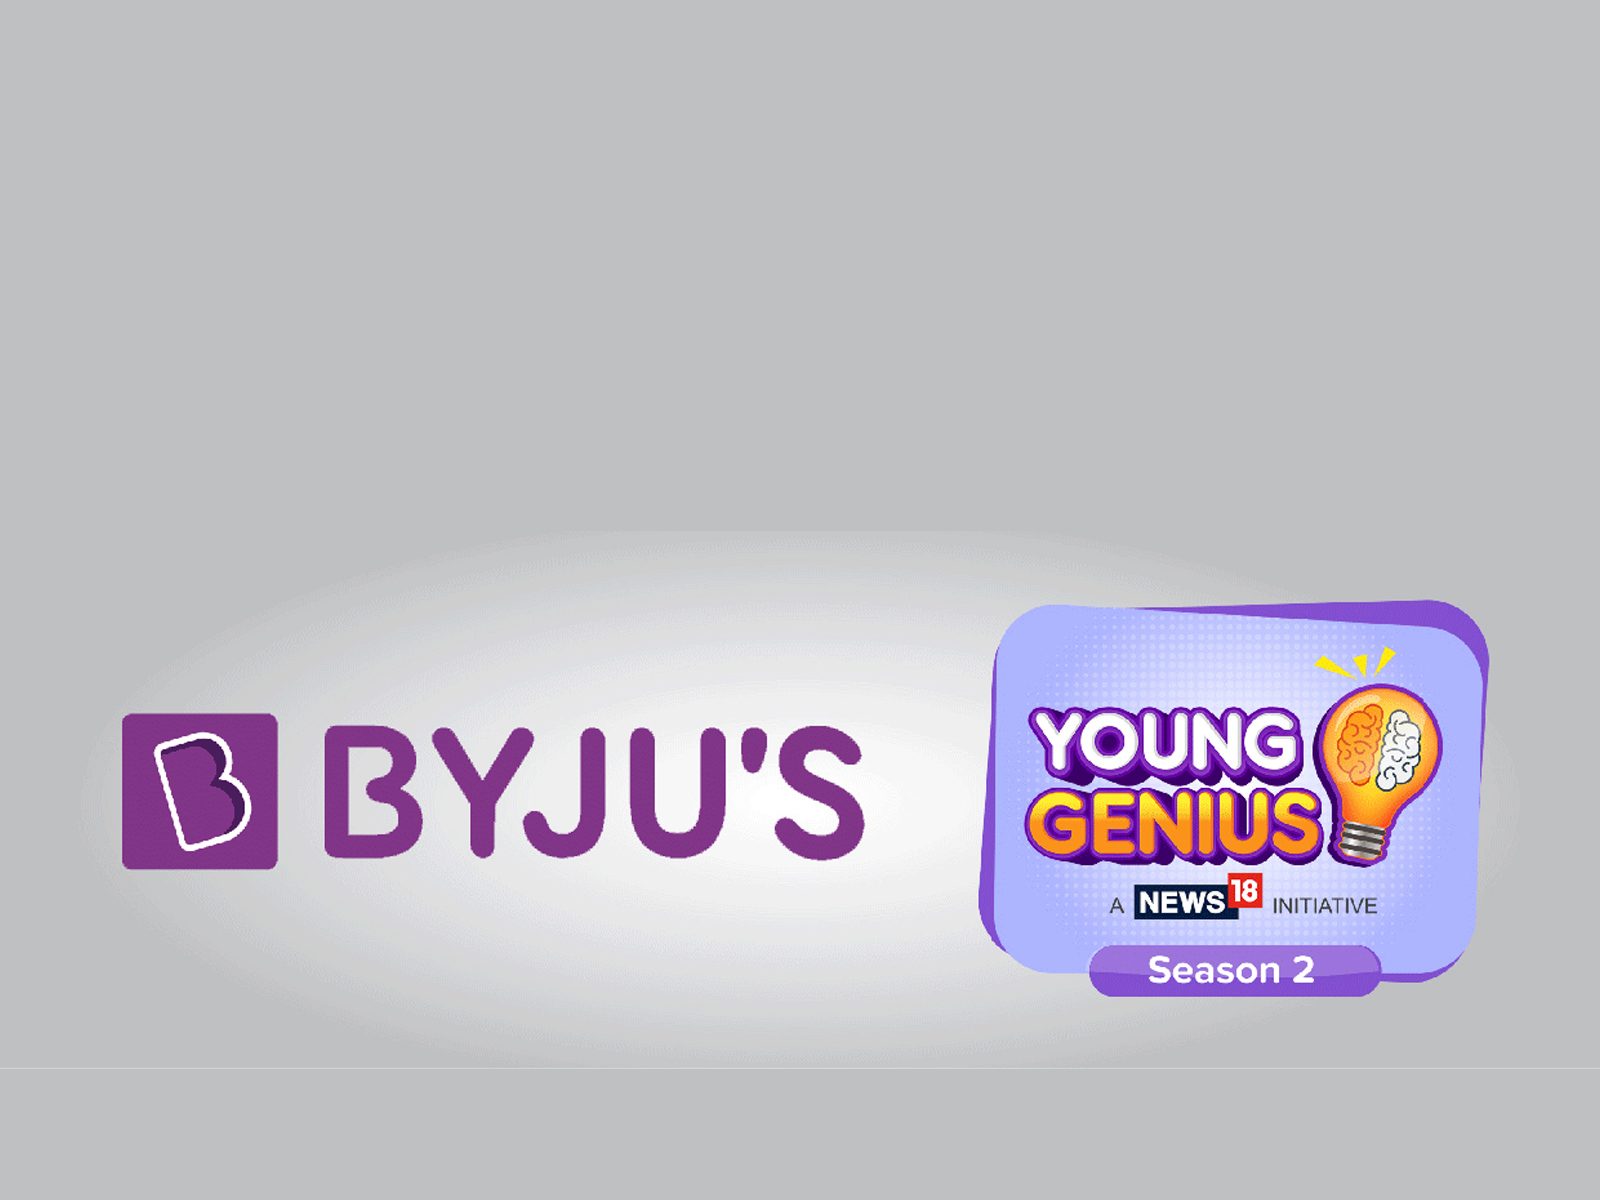 BYJU’S Young Genius ਸੀਜ਼ਨ 2 ਦੀਆਂ ਕੁਝ ਭਾਵੁਕ ਅਤੇ ਦਿਲਚਸਪ ਝਲਕੀਆਂ ਦਰਸ਼ਕਾਂ ਨੂੰ ਆਪਣੇ ਆਖਰੀ ਐਪੀਸੋਡ ਵਿੱਚ ਉਡੀਕ ਰਹੀਆਂ ਹਨ